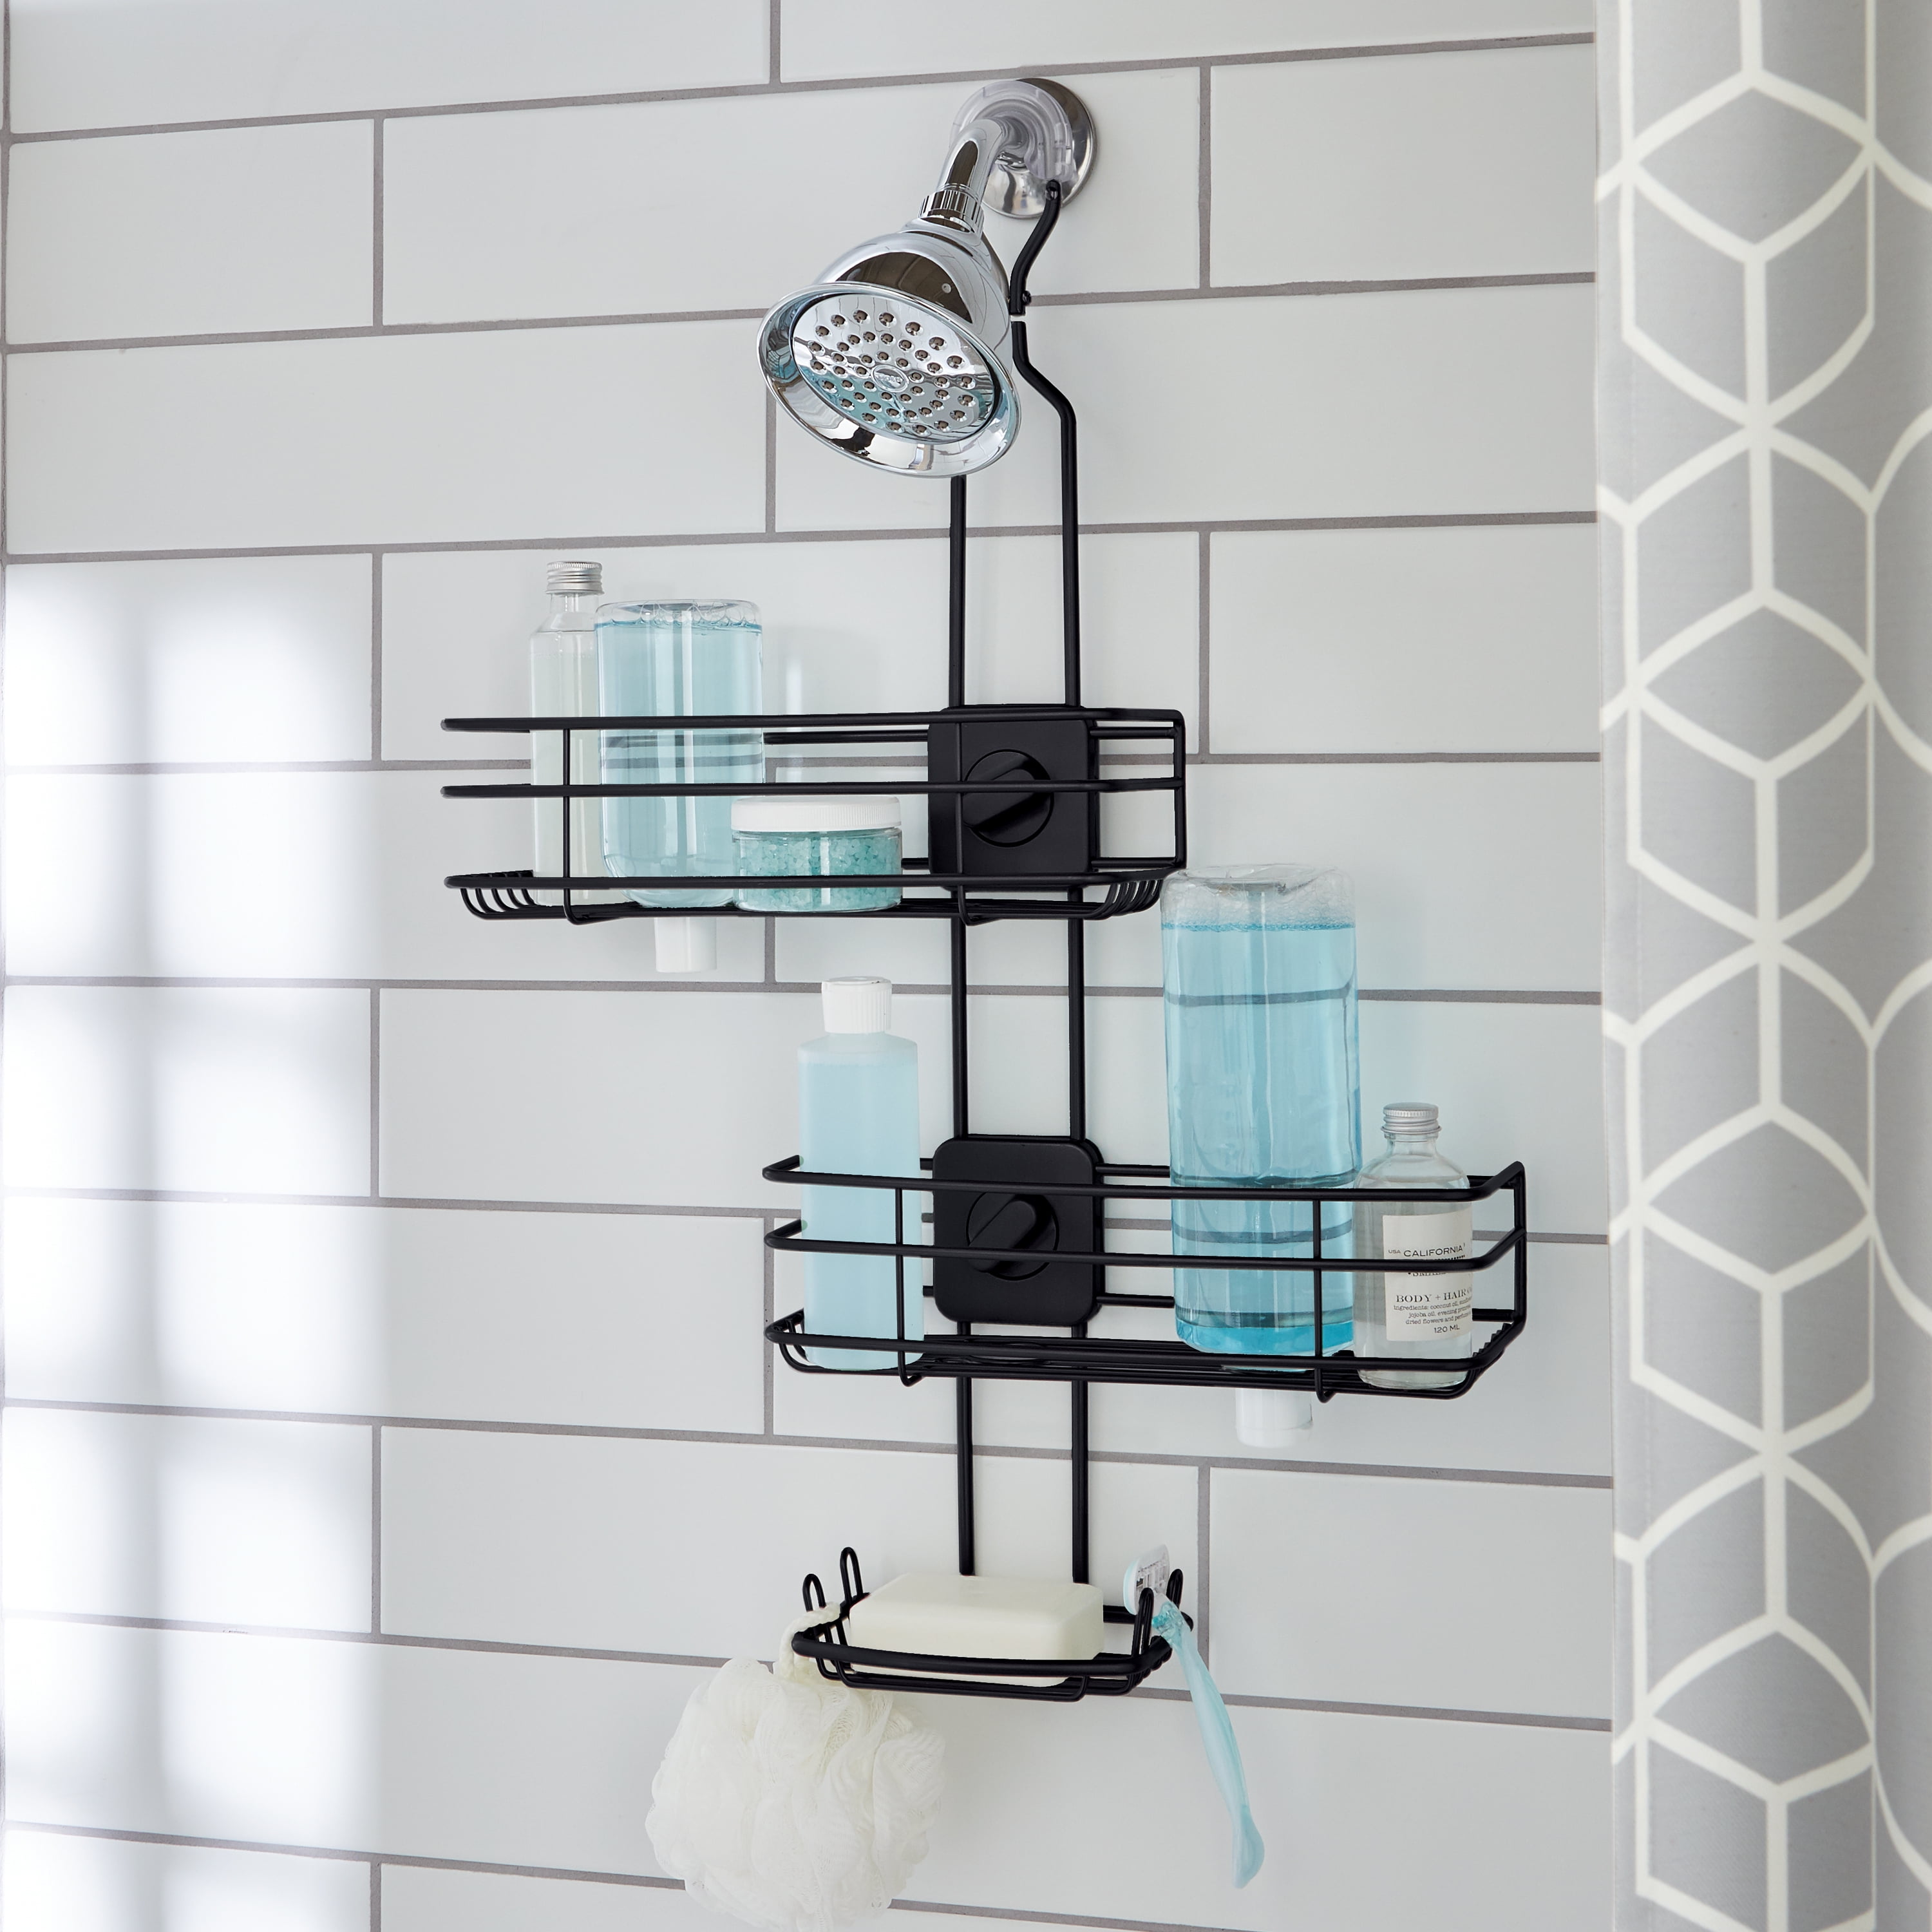 Bathroom Shower Caddy MyGift 3 Tier Hanging Shower Head Design Modern Matte Black Metal Wire Baskets Home 